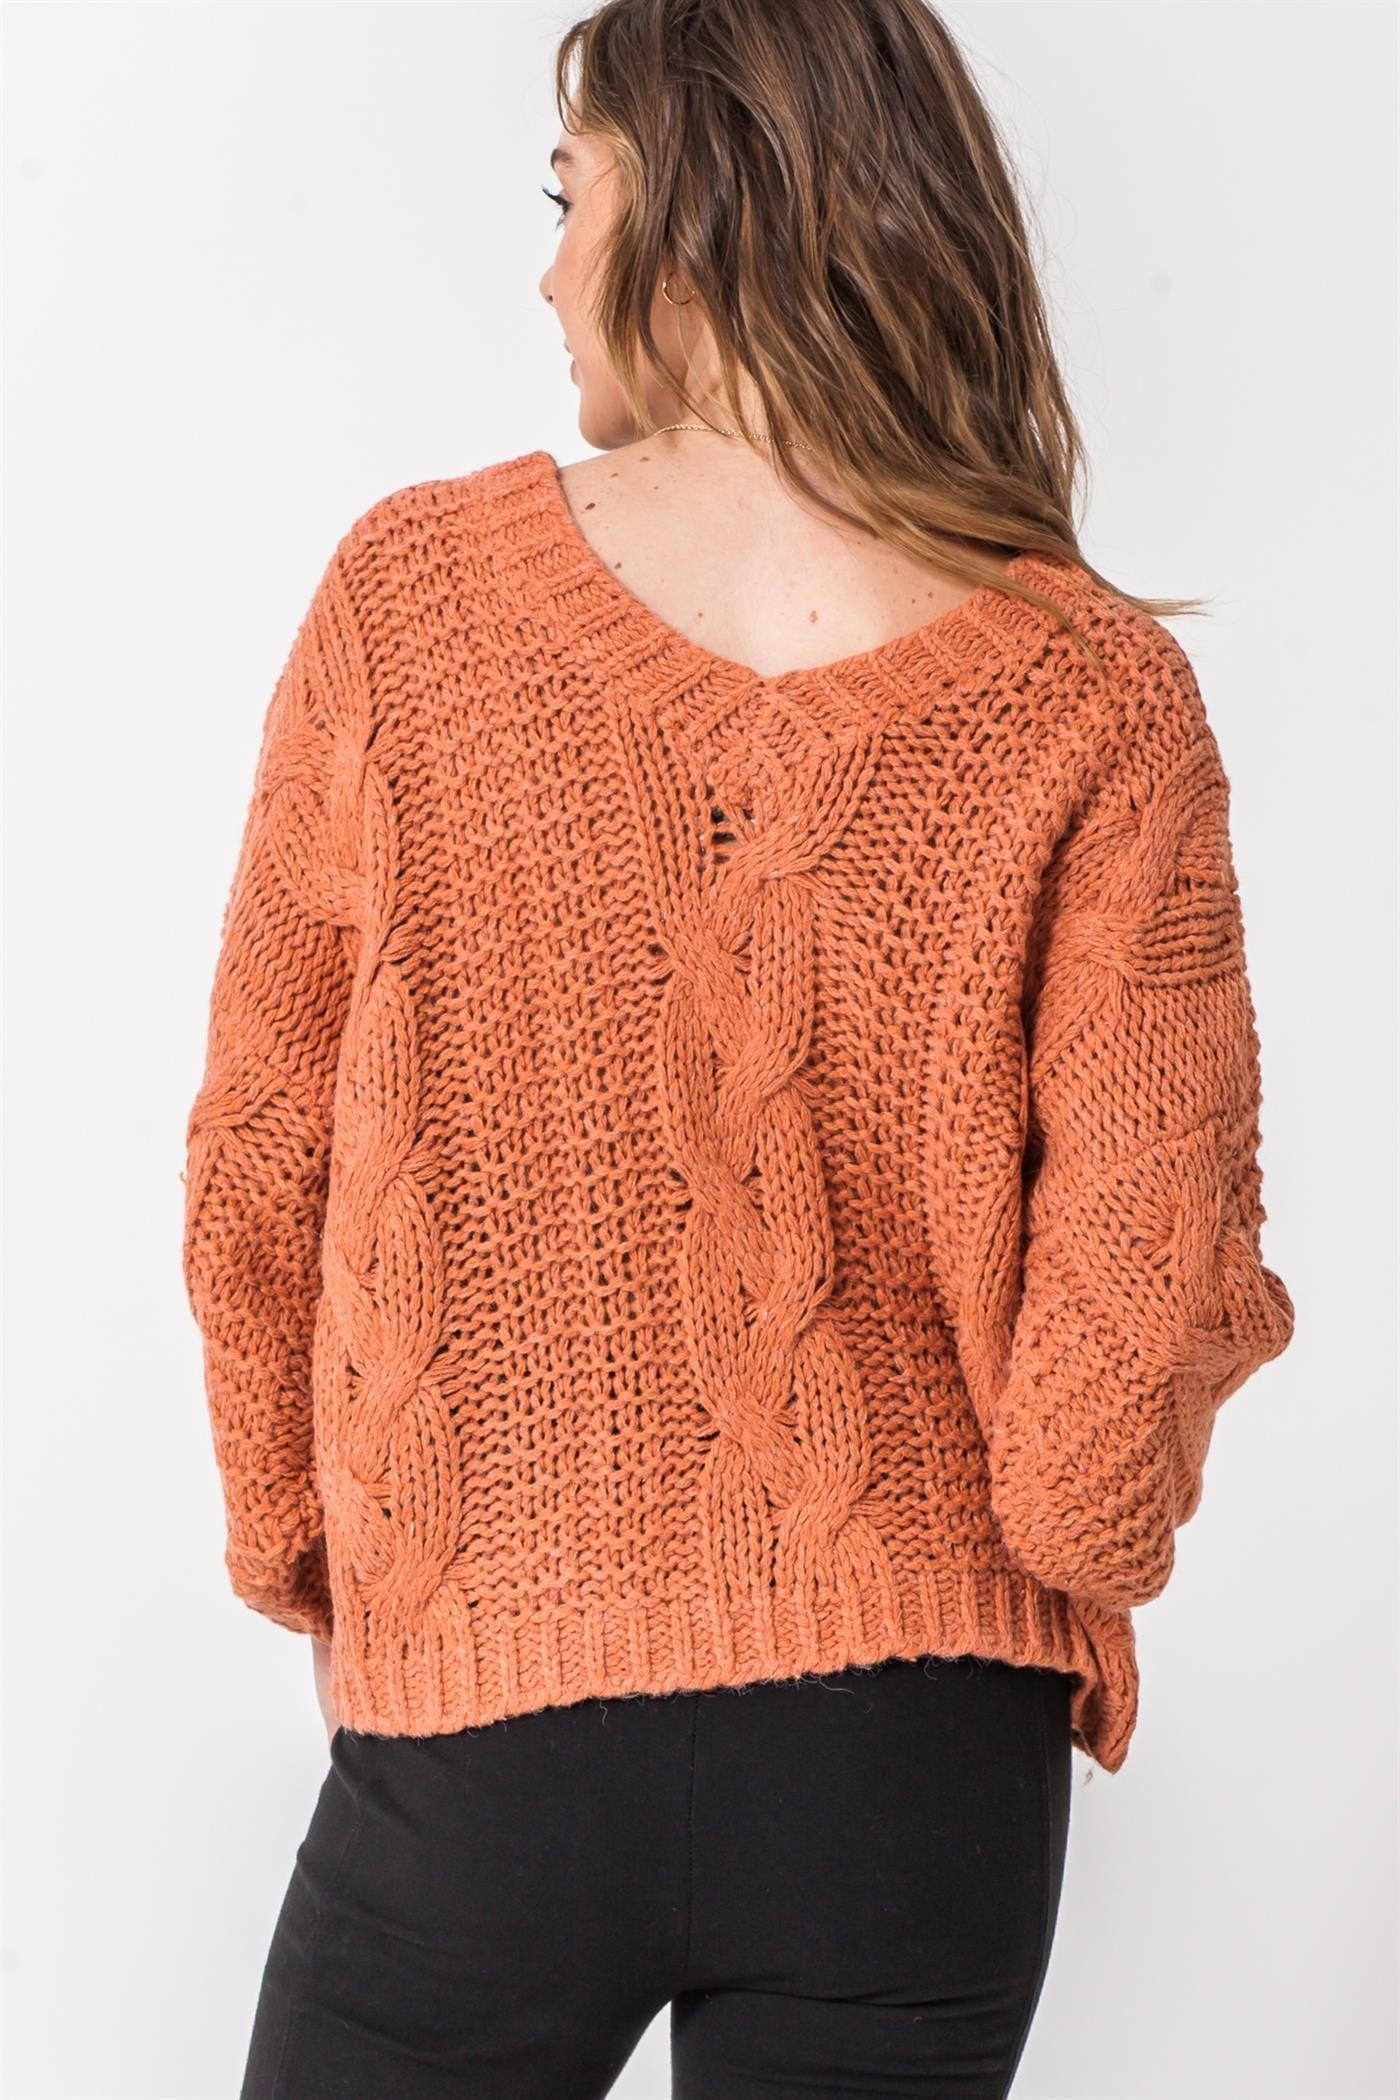 Copper Sweater *Final Sale*